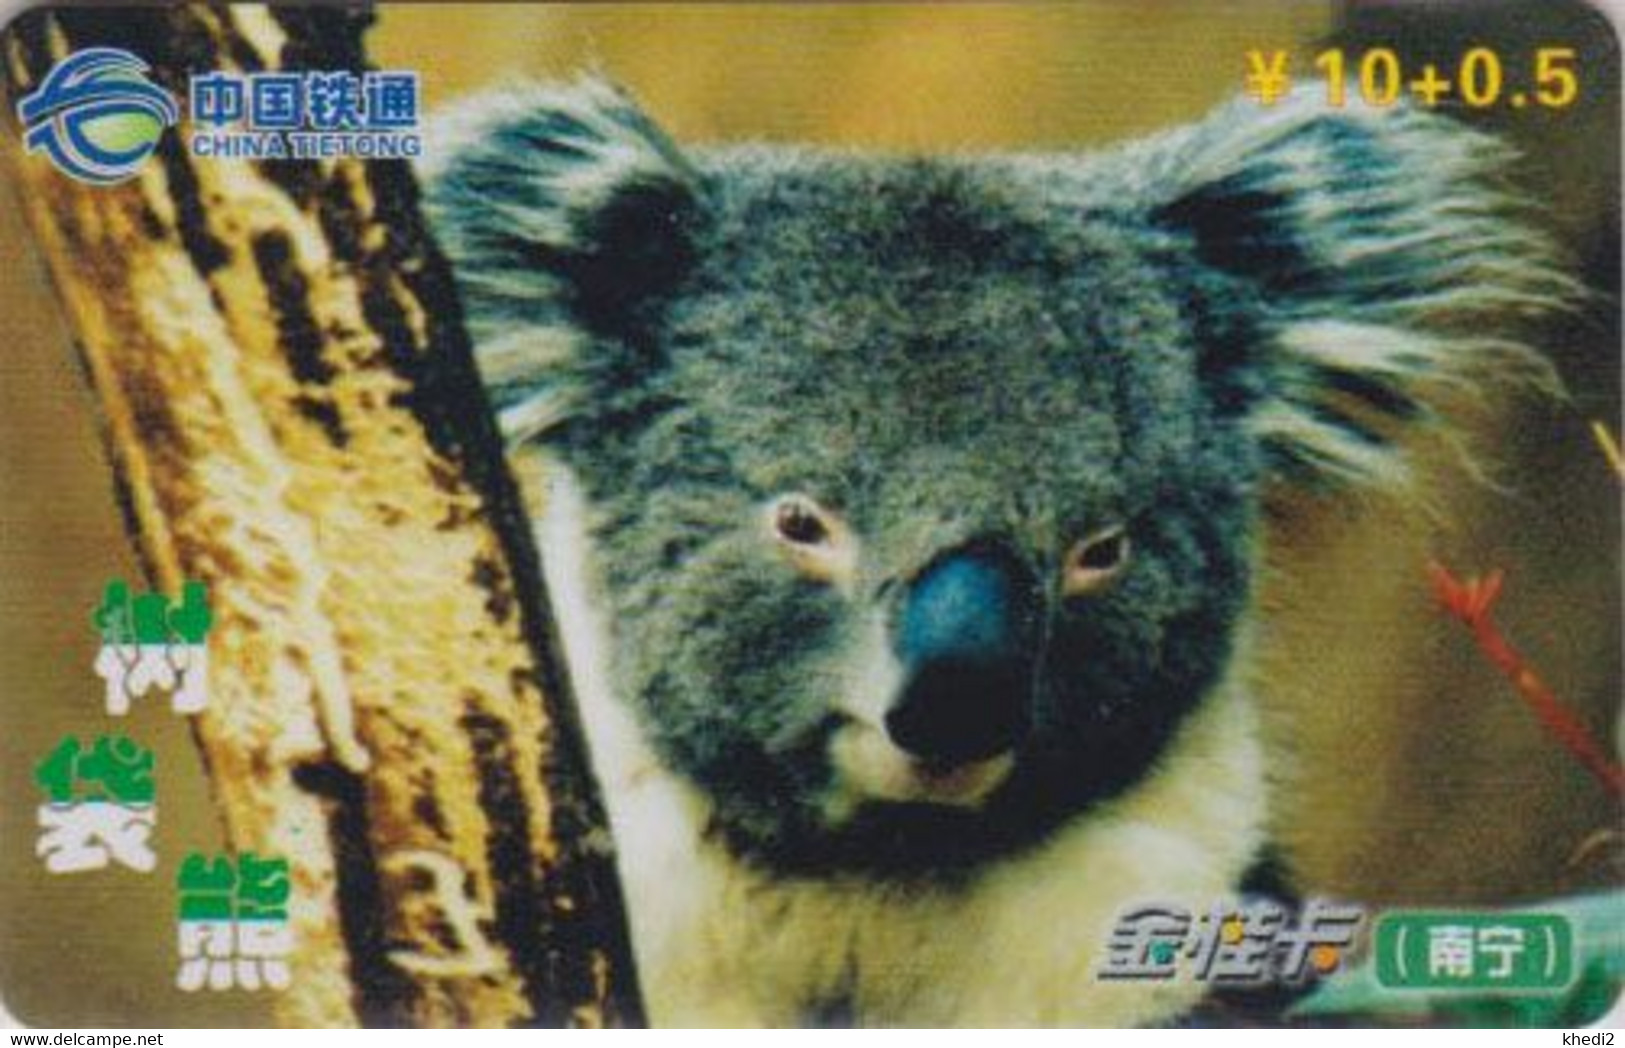 Télécarte CHINE - ANIMAL / SERIE 4/8 - Bébé KOALA - CHINA TIETO?G Phonecard Telefonkarte  - BE 201 - China